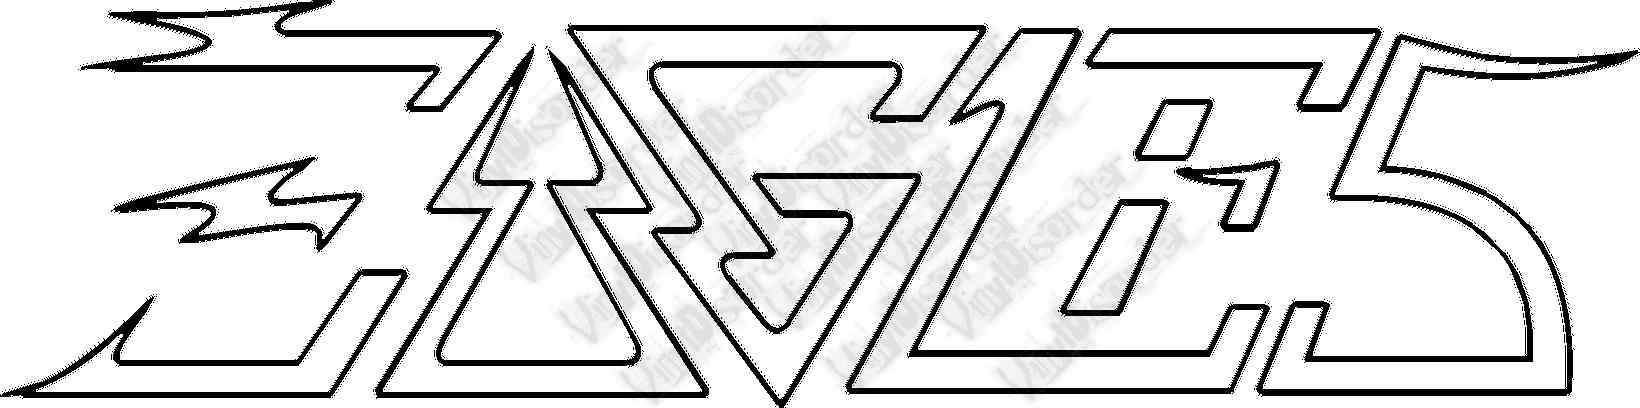 the-eagles-band-logo-logodix